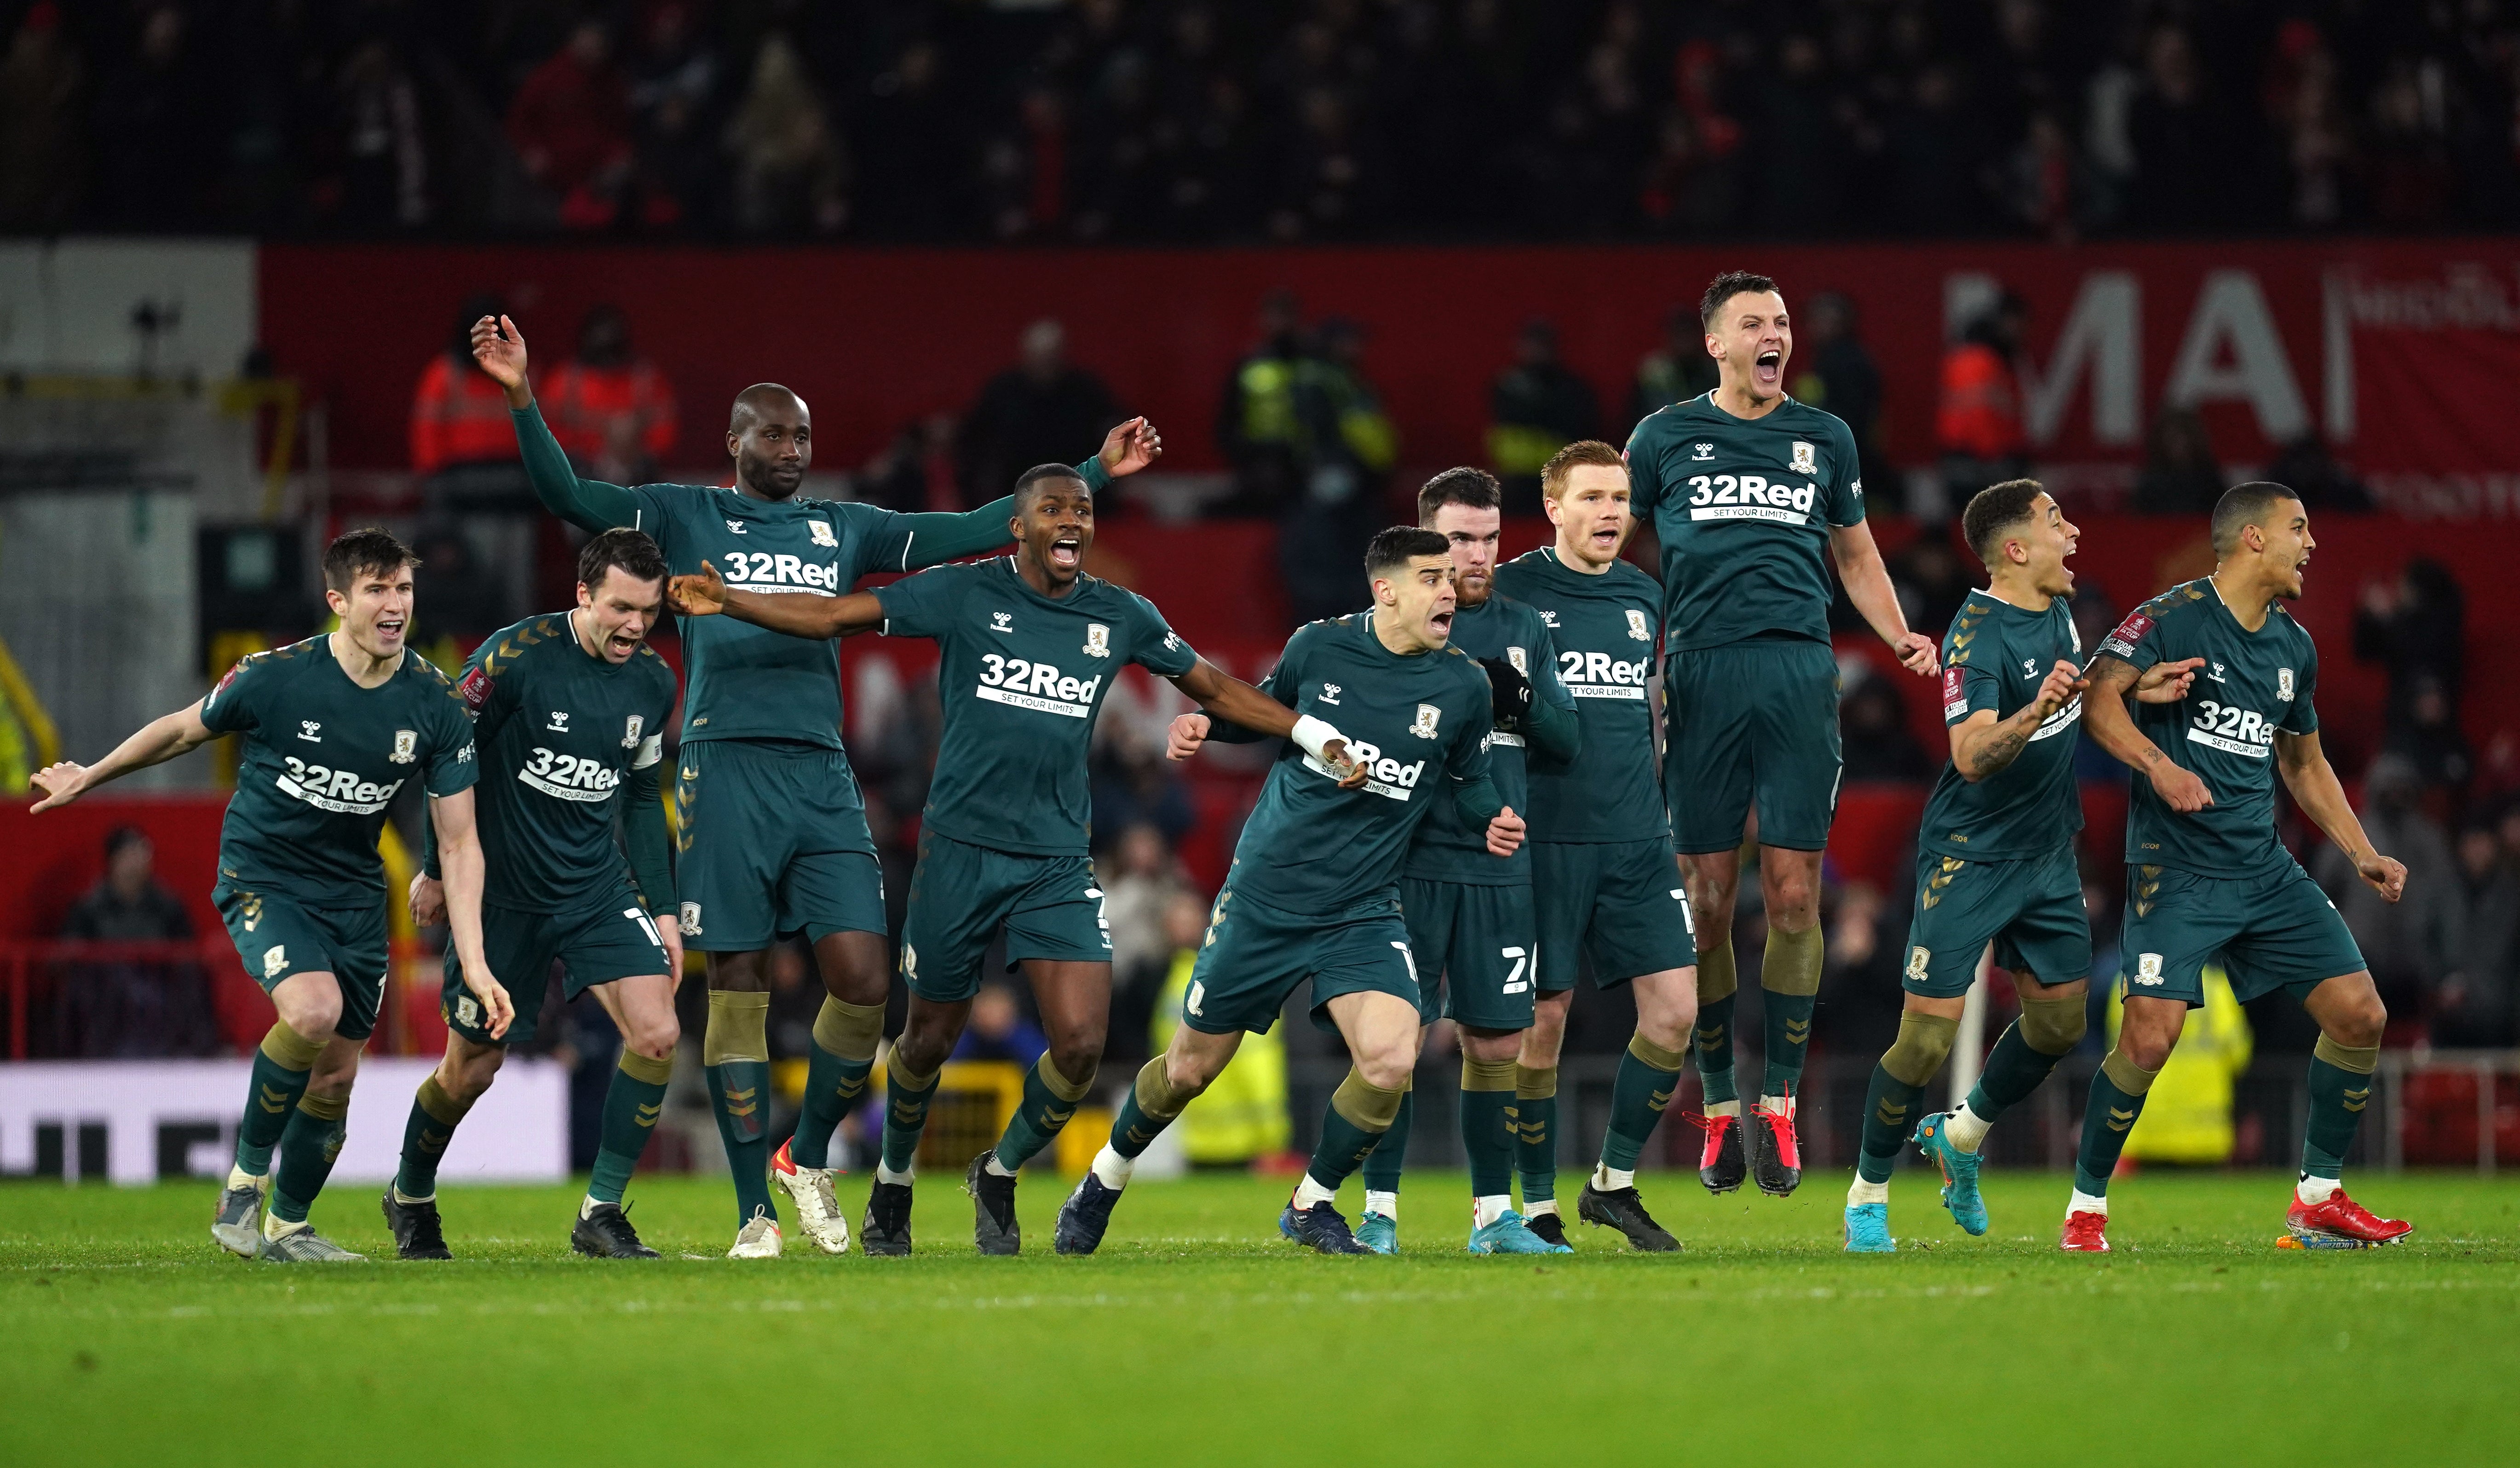 Middlesbrough celebrate winning the penalty shootout (Martin Rickett/PA).